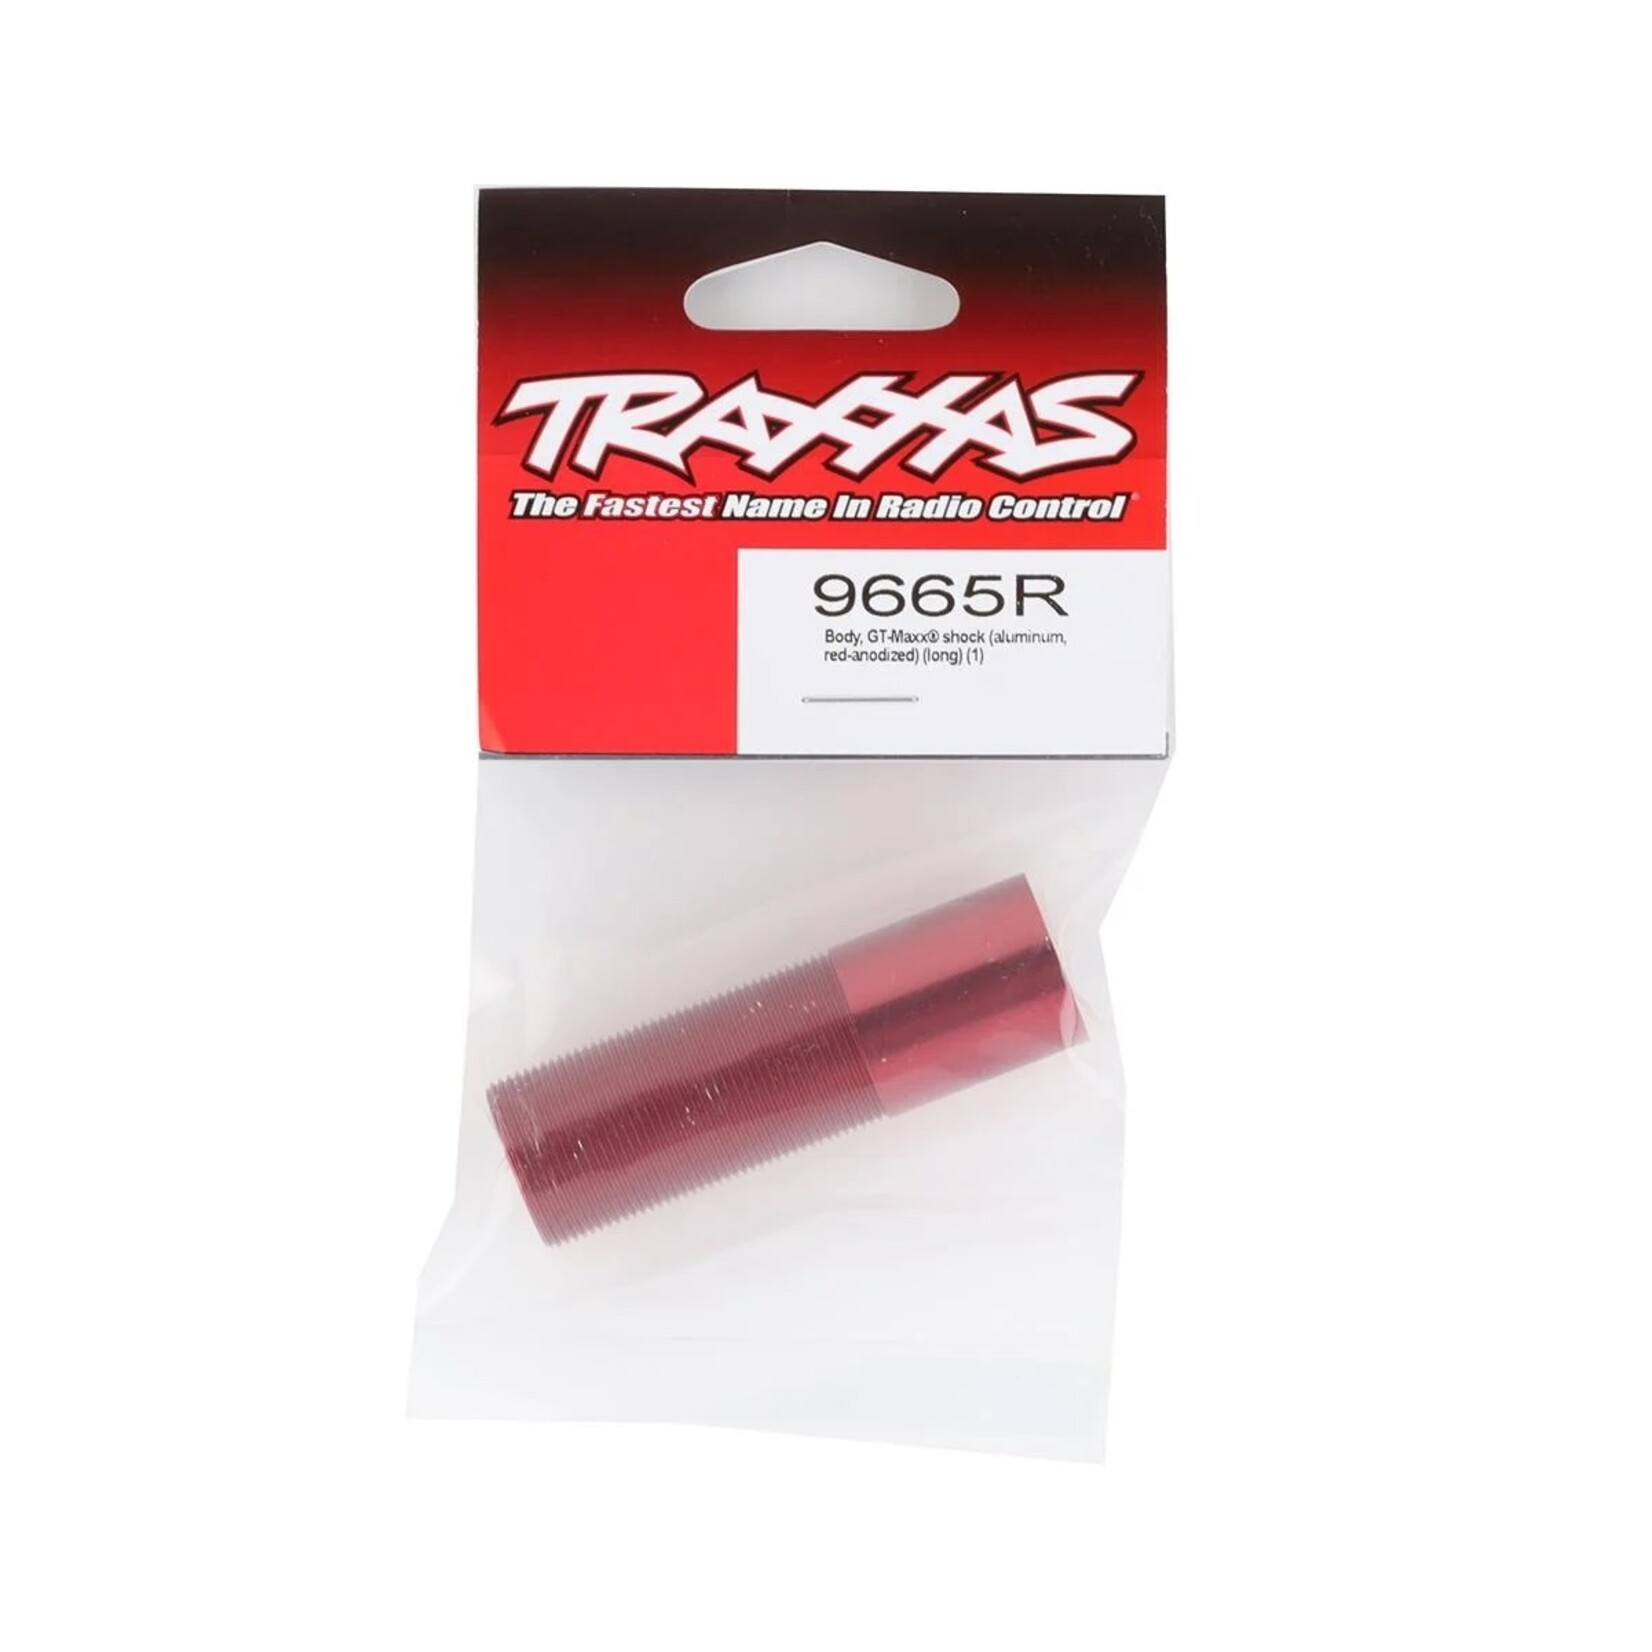 Traxxas Traxxas Sledge GT-Maxx Aluminum Shock Body (Red) (Long) #9665R